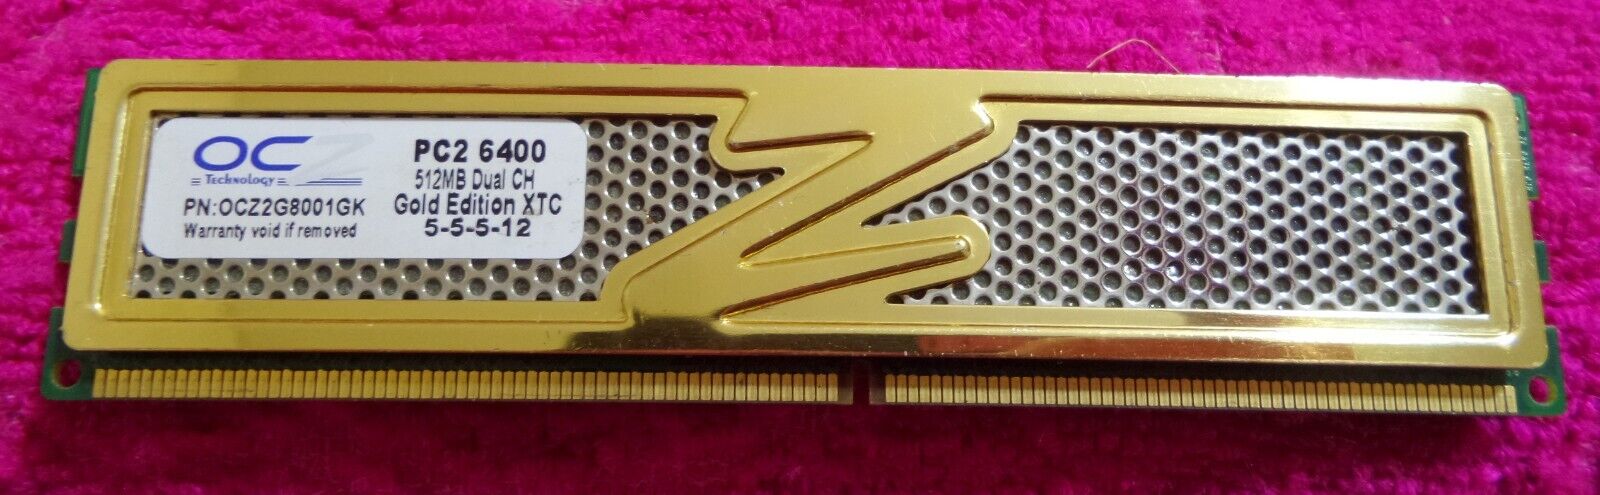 rv OCZ-Technology PC2 6400 512 MB dual CH XTC 5-5-5-12 Gold Edition 4292